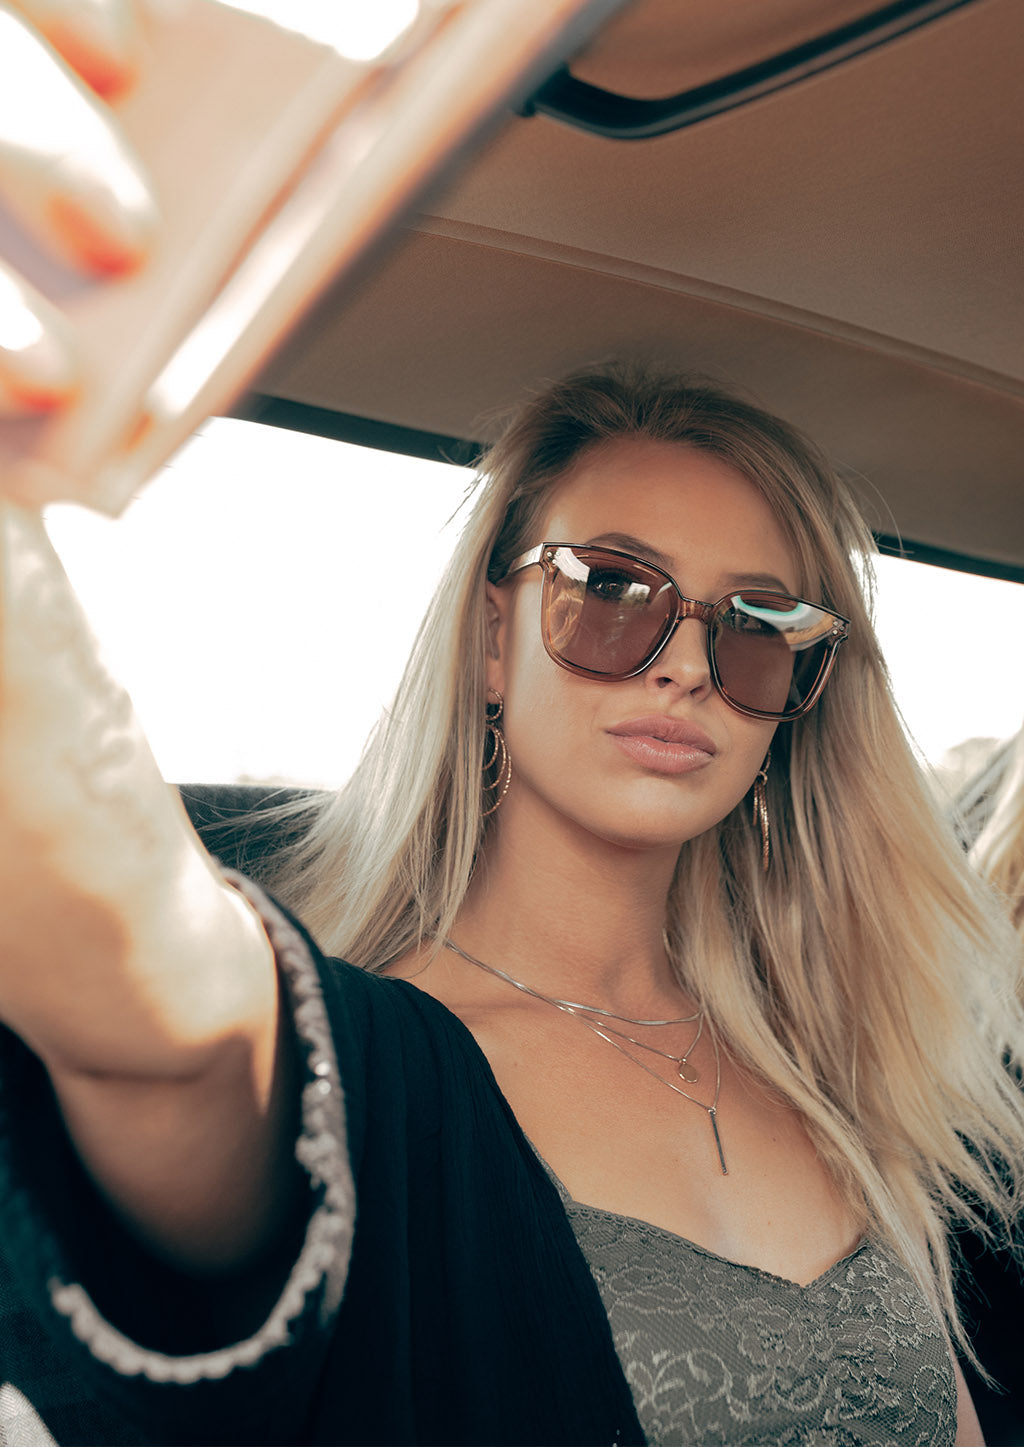 Jasmine Wayfarer sunglasses - On blonde female model doing selfies